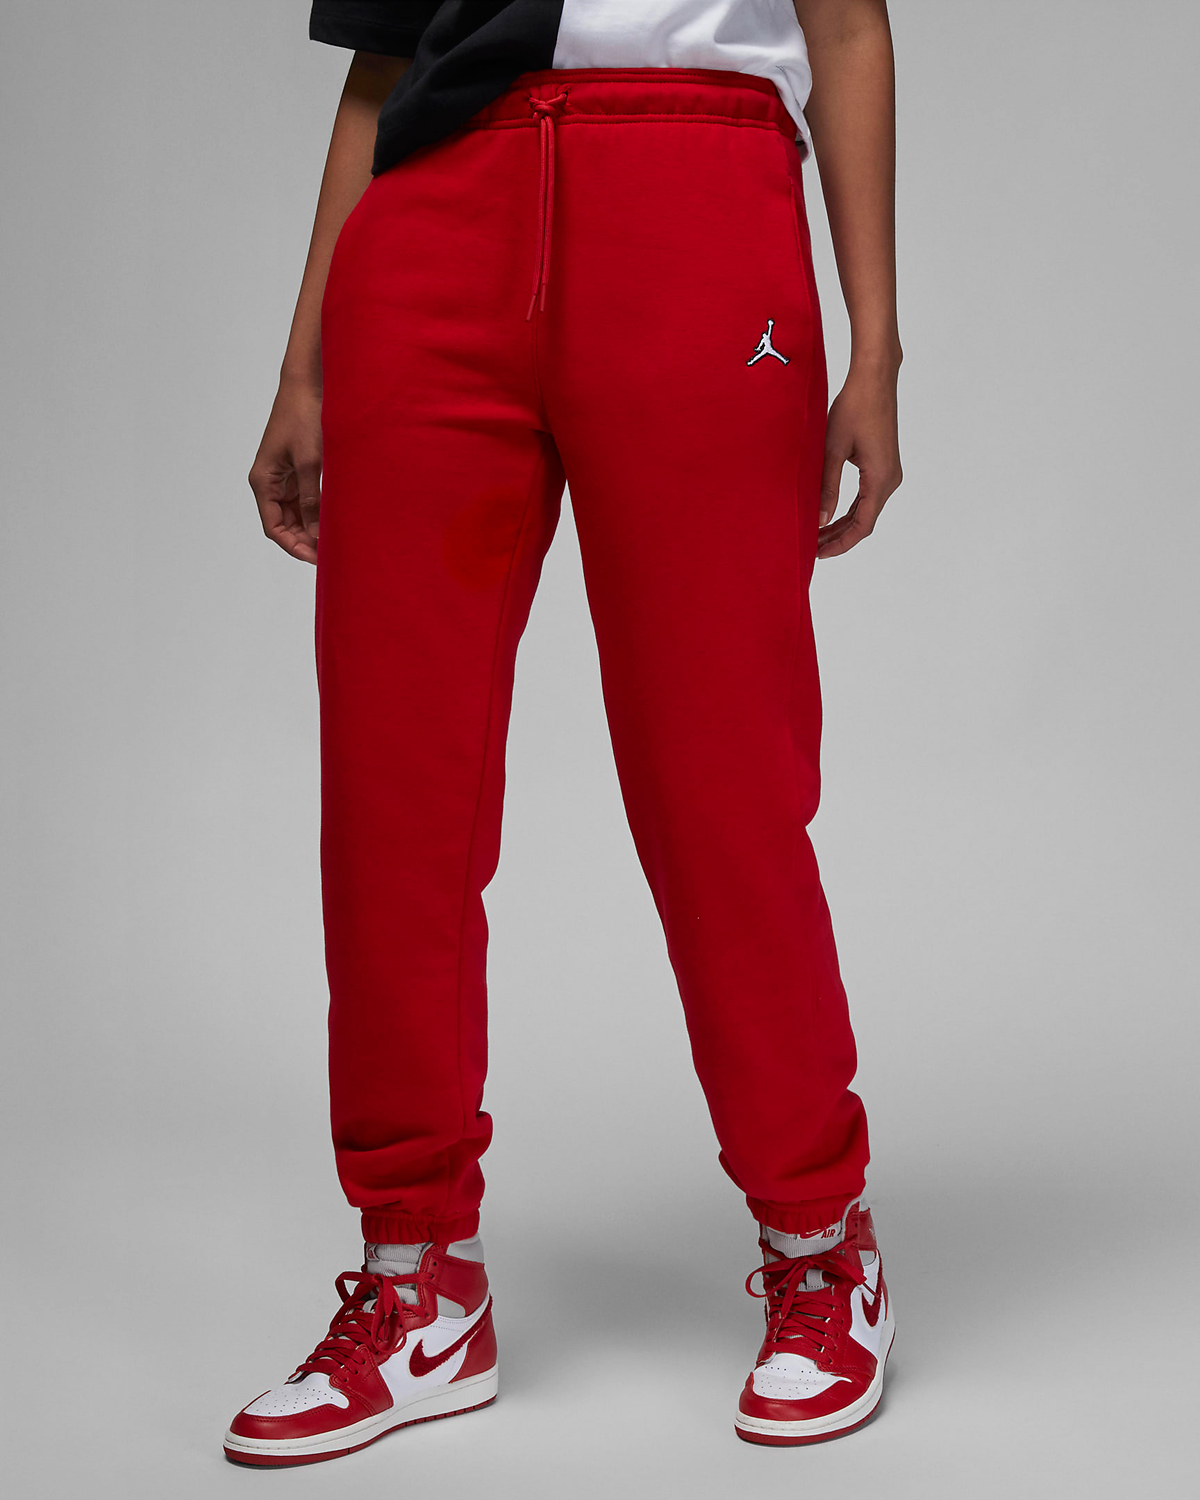 Jordan-Womens-Brooklyn-Fleece-Pants-Gym-Red